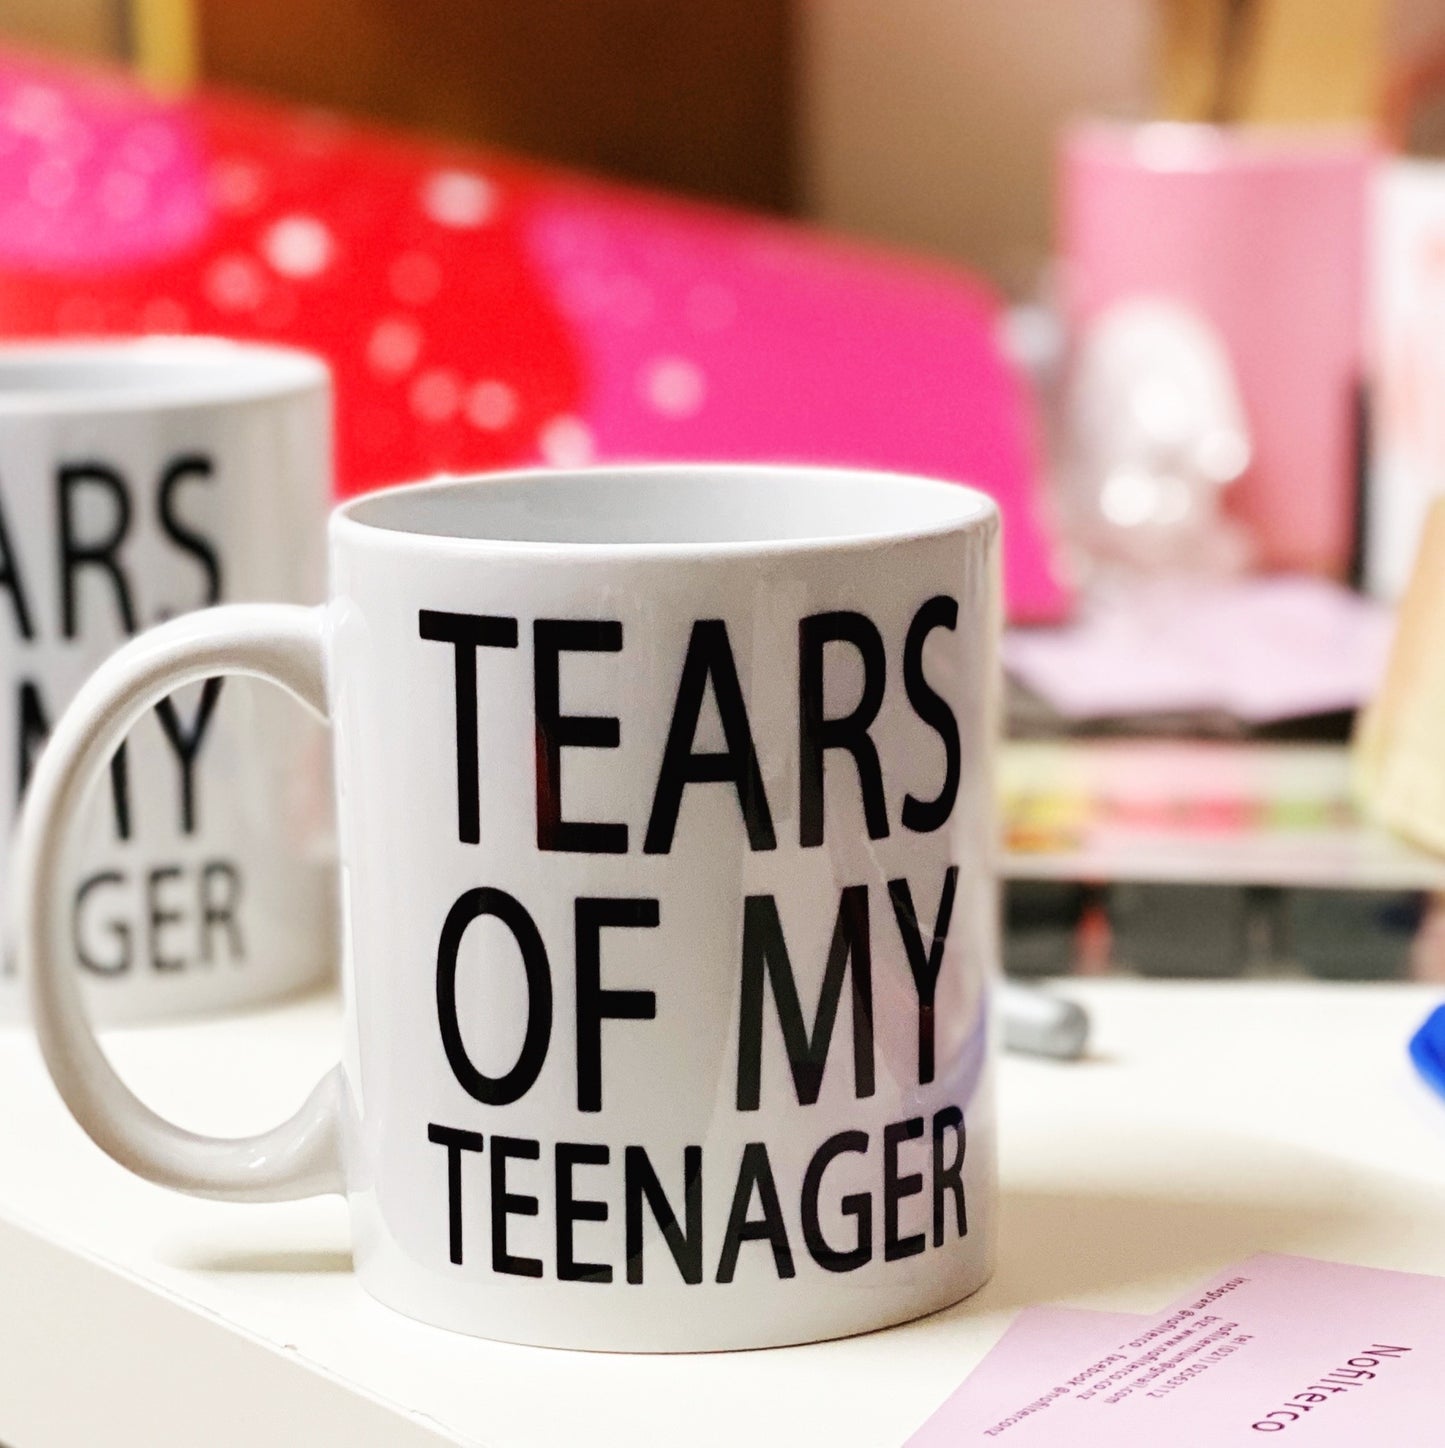 Tears of my teenager mug